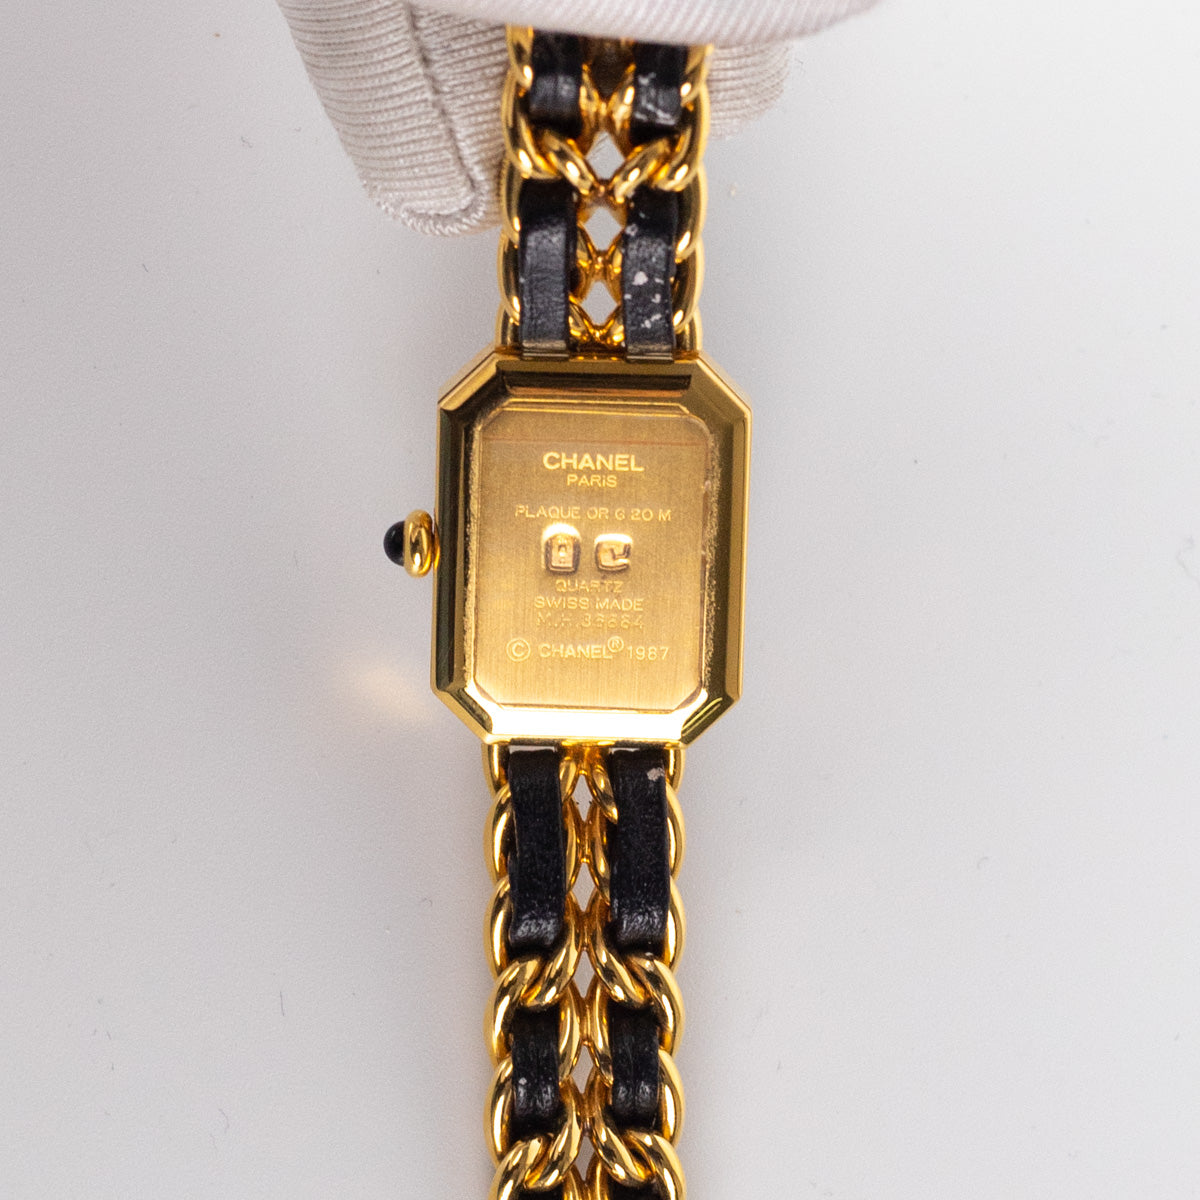 Chia sẻ với hơn 84 vintage chanel premiere watch siêu đỉnh  trieuson5